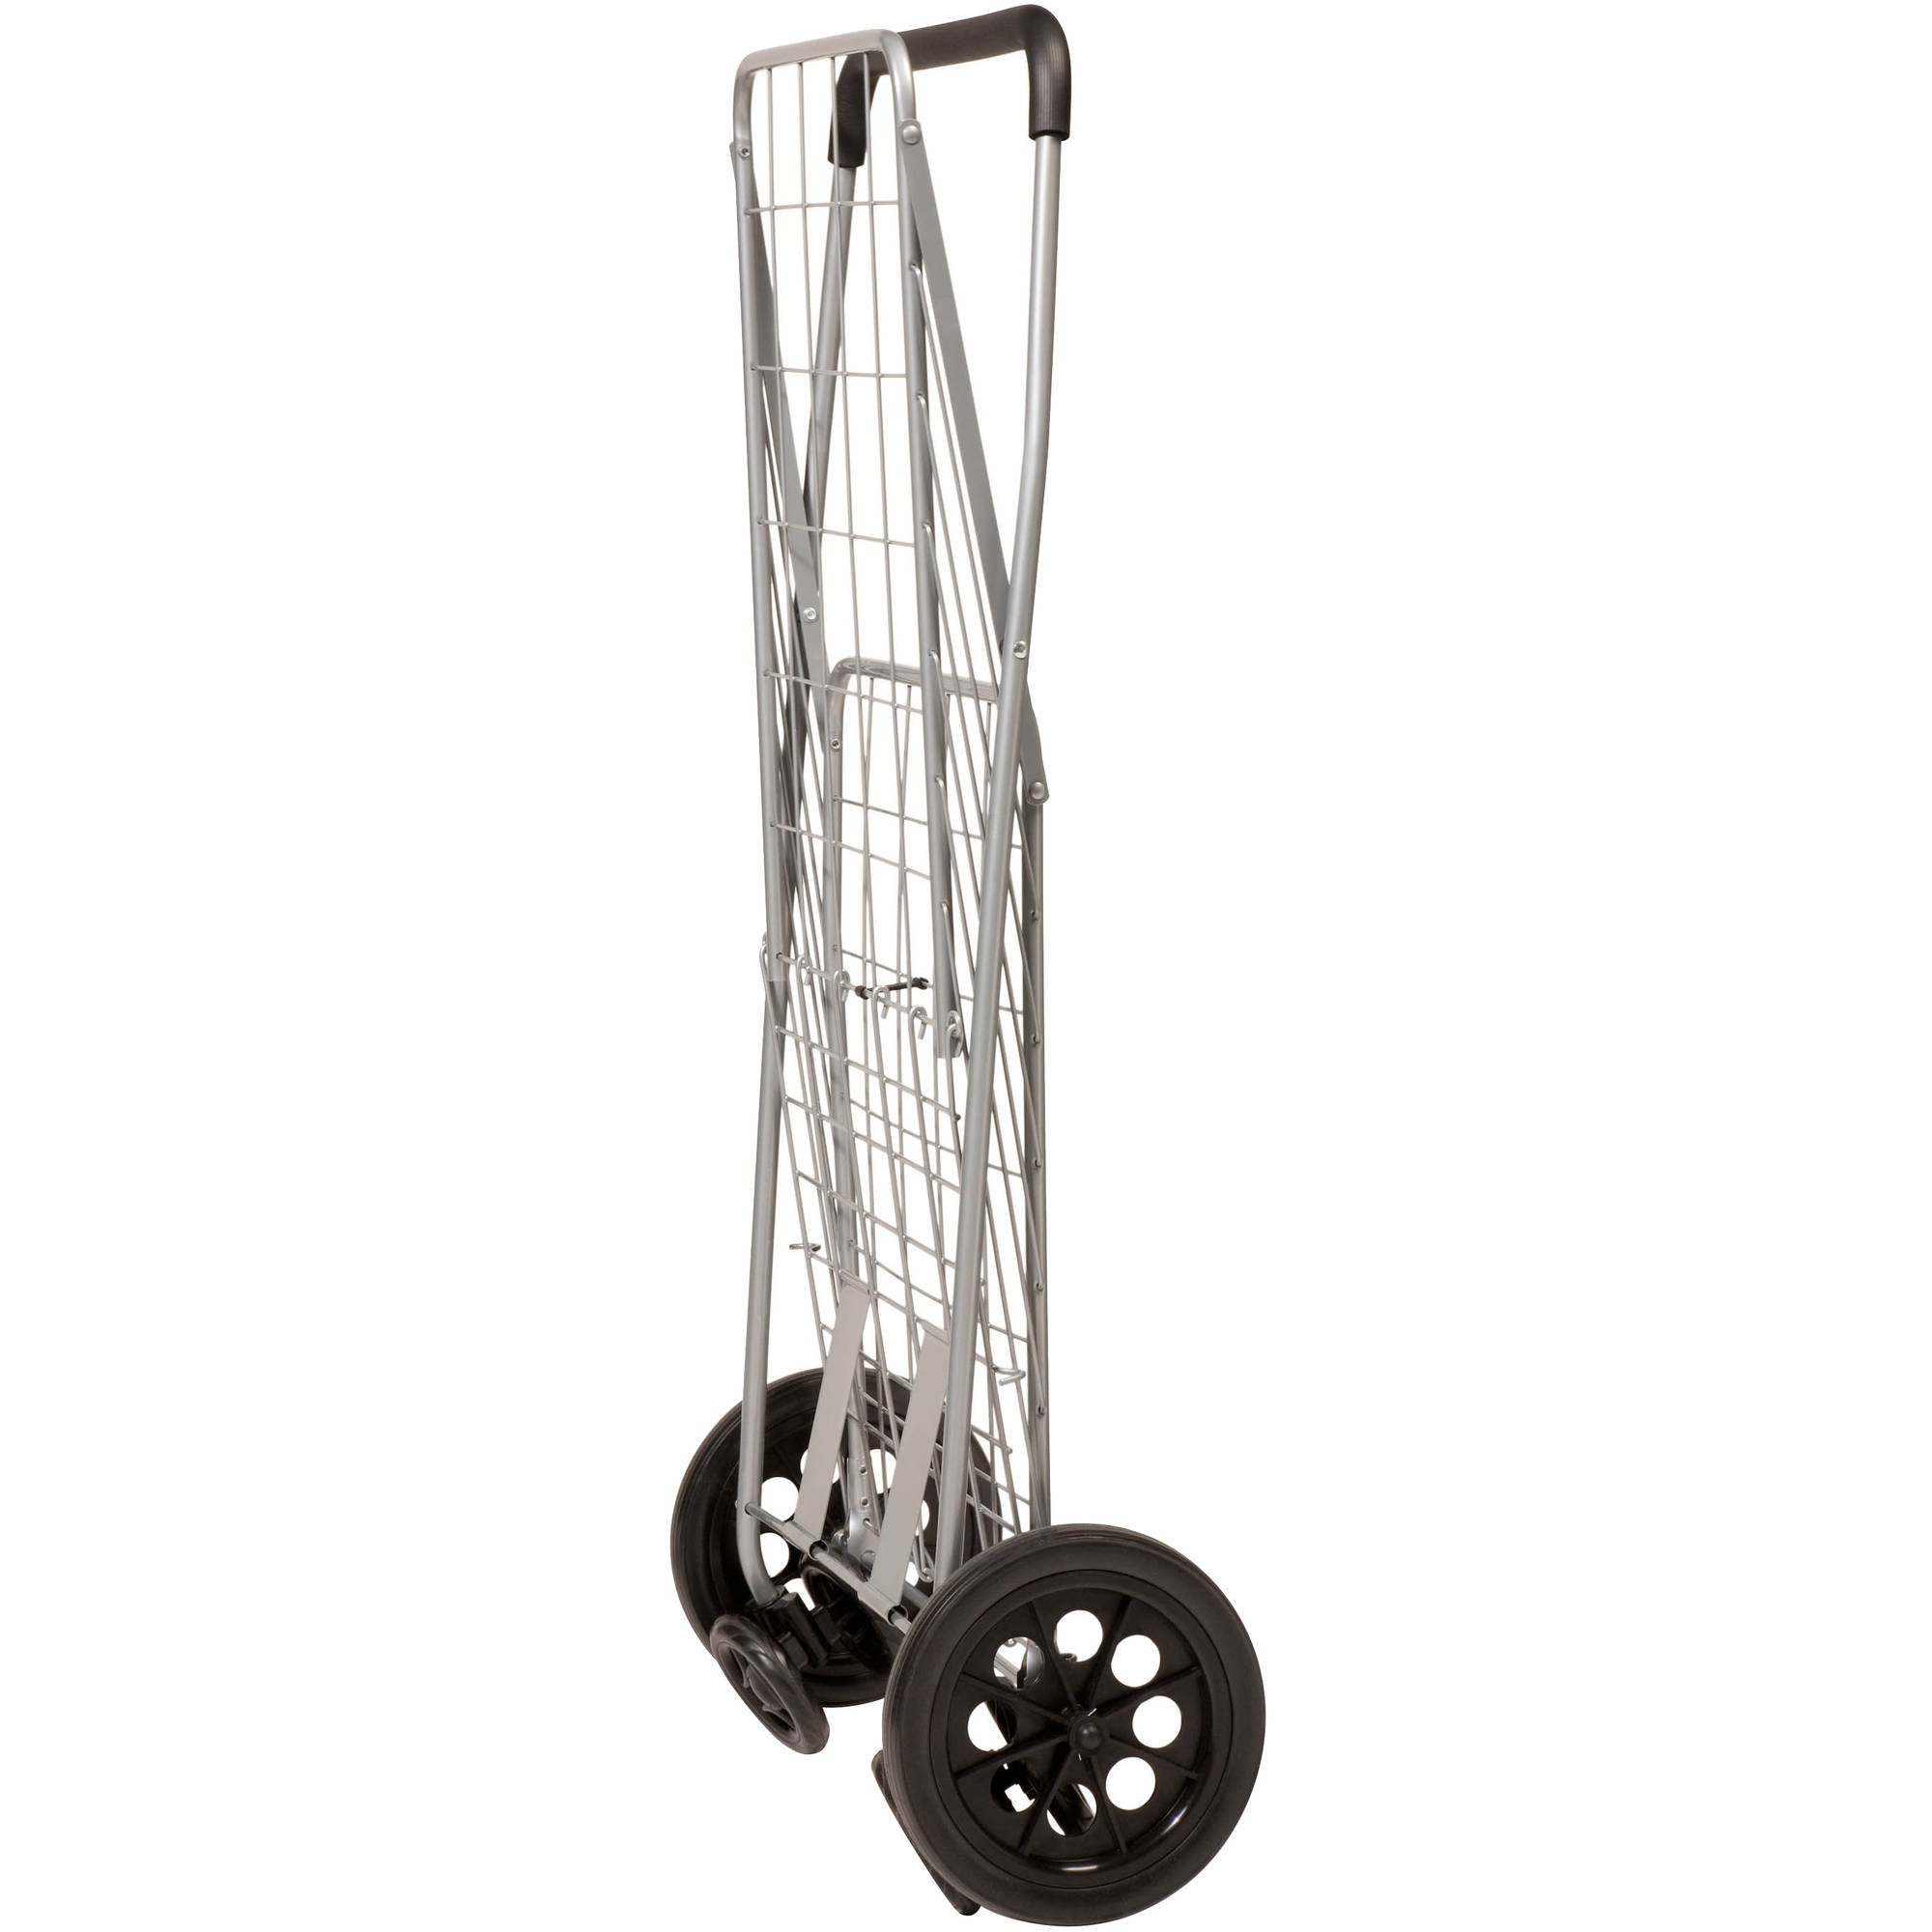 Honey-Can-Do 4 Wheel Folding Utility Cart, Silver - image 4 of 6